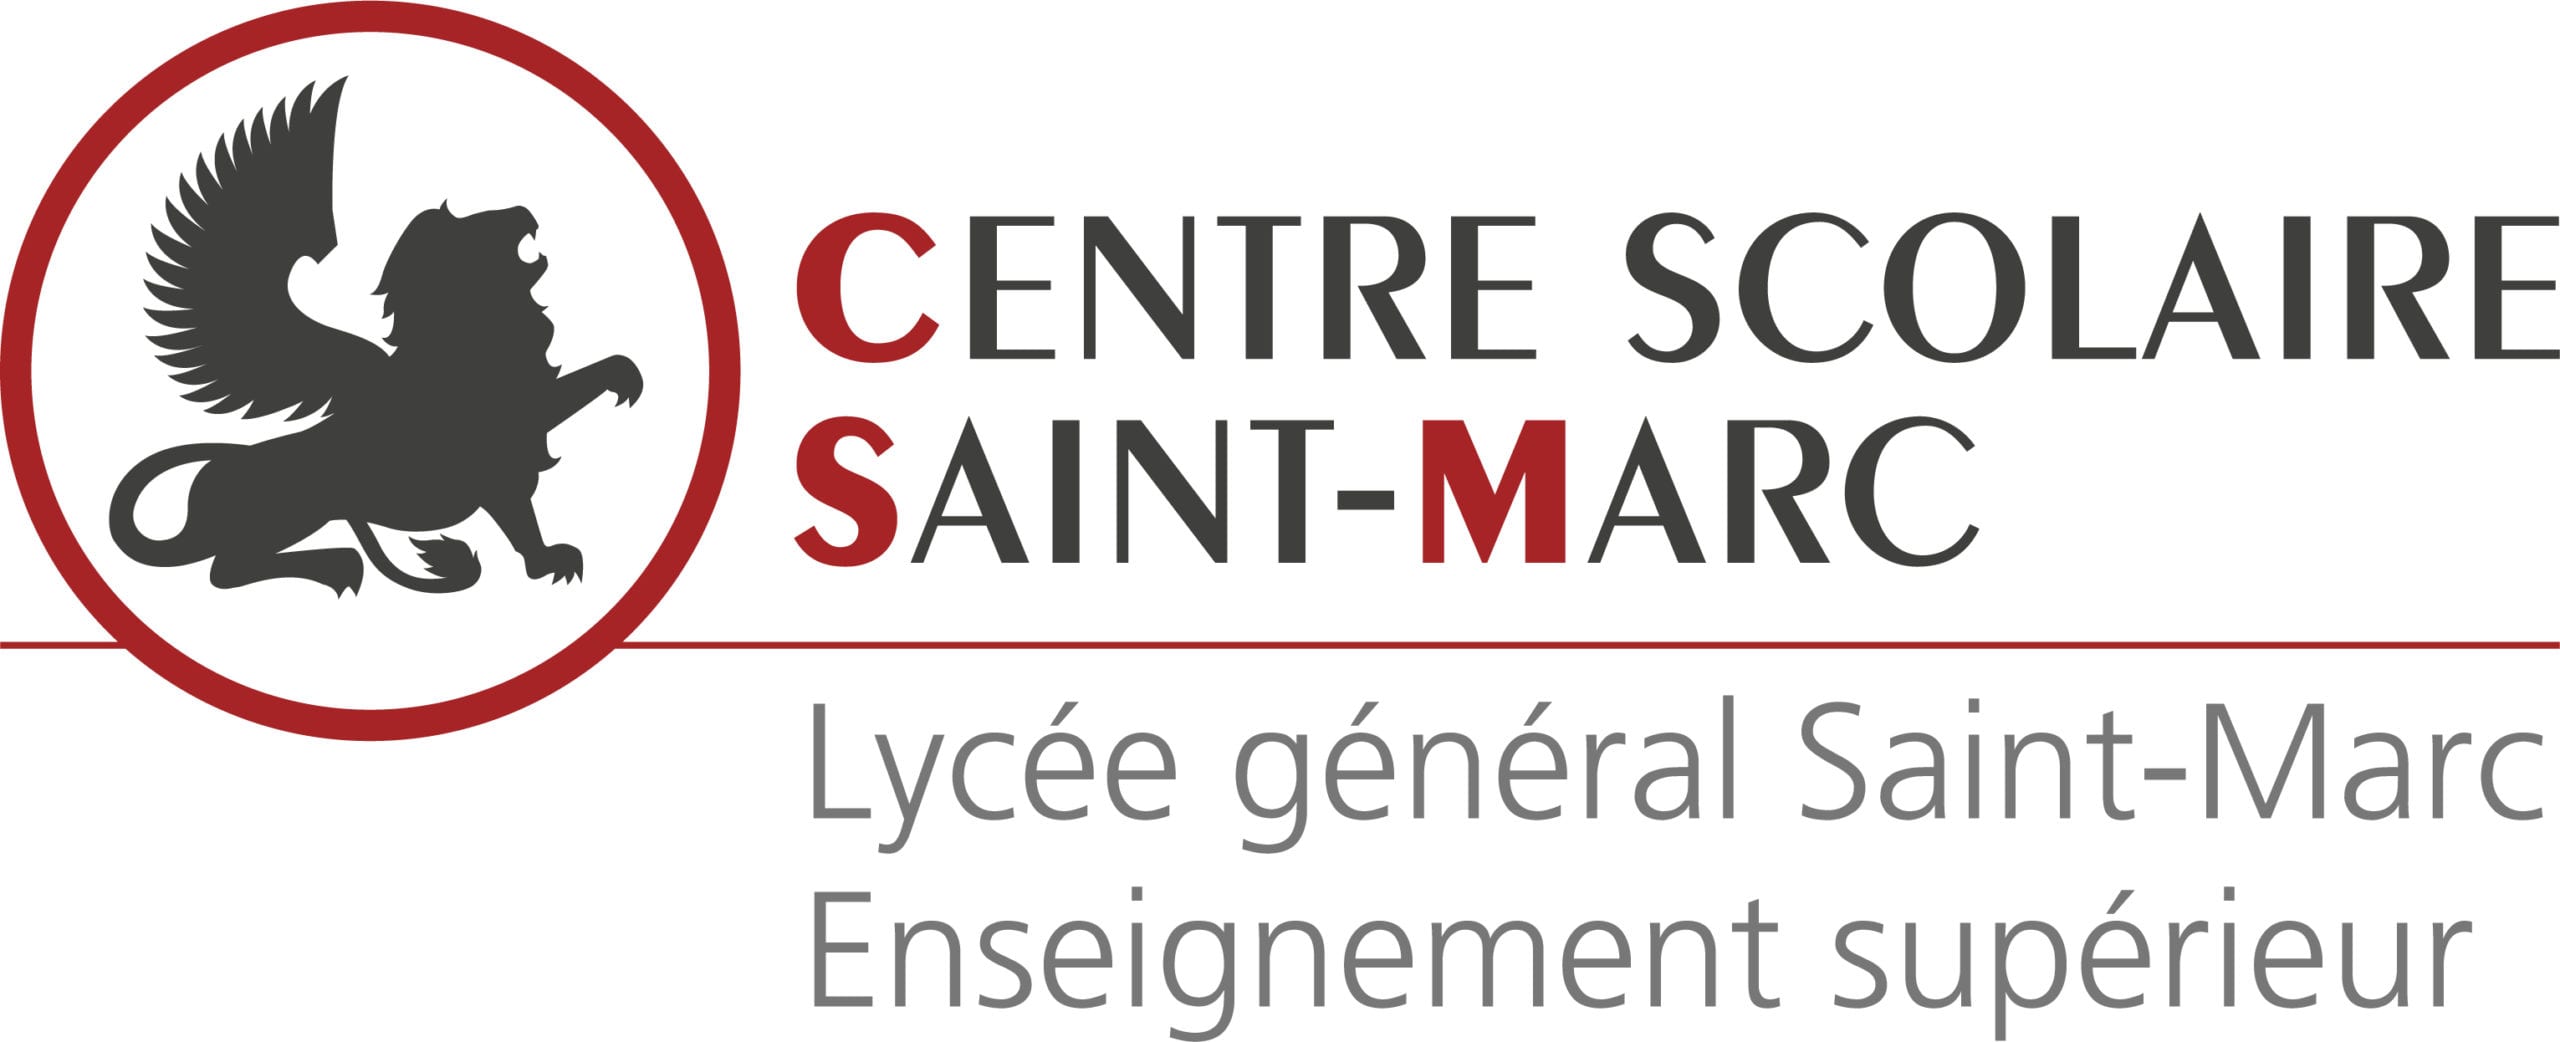 Lycee Sain Marc Lyon